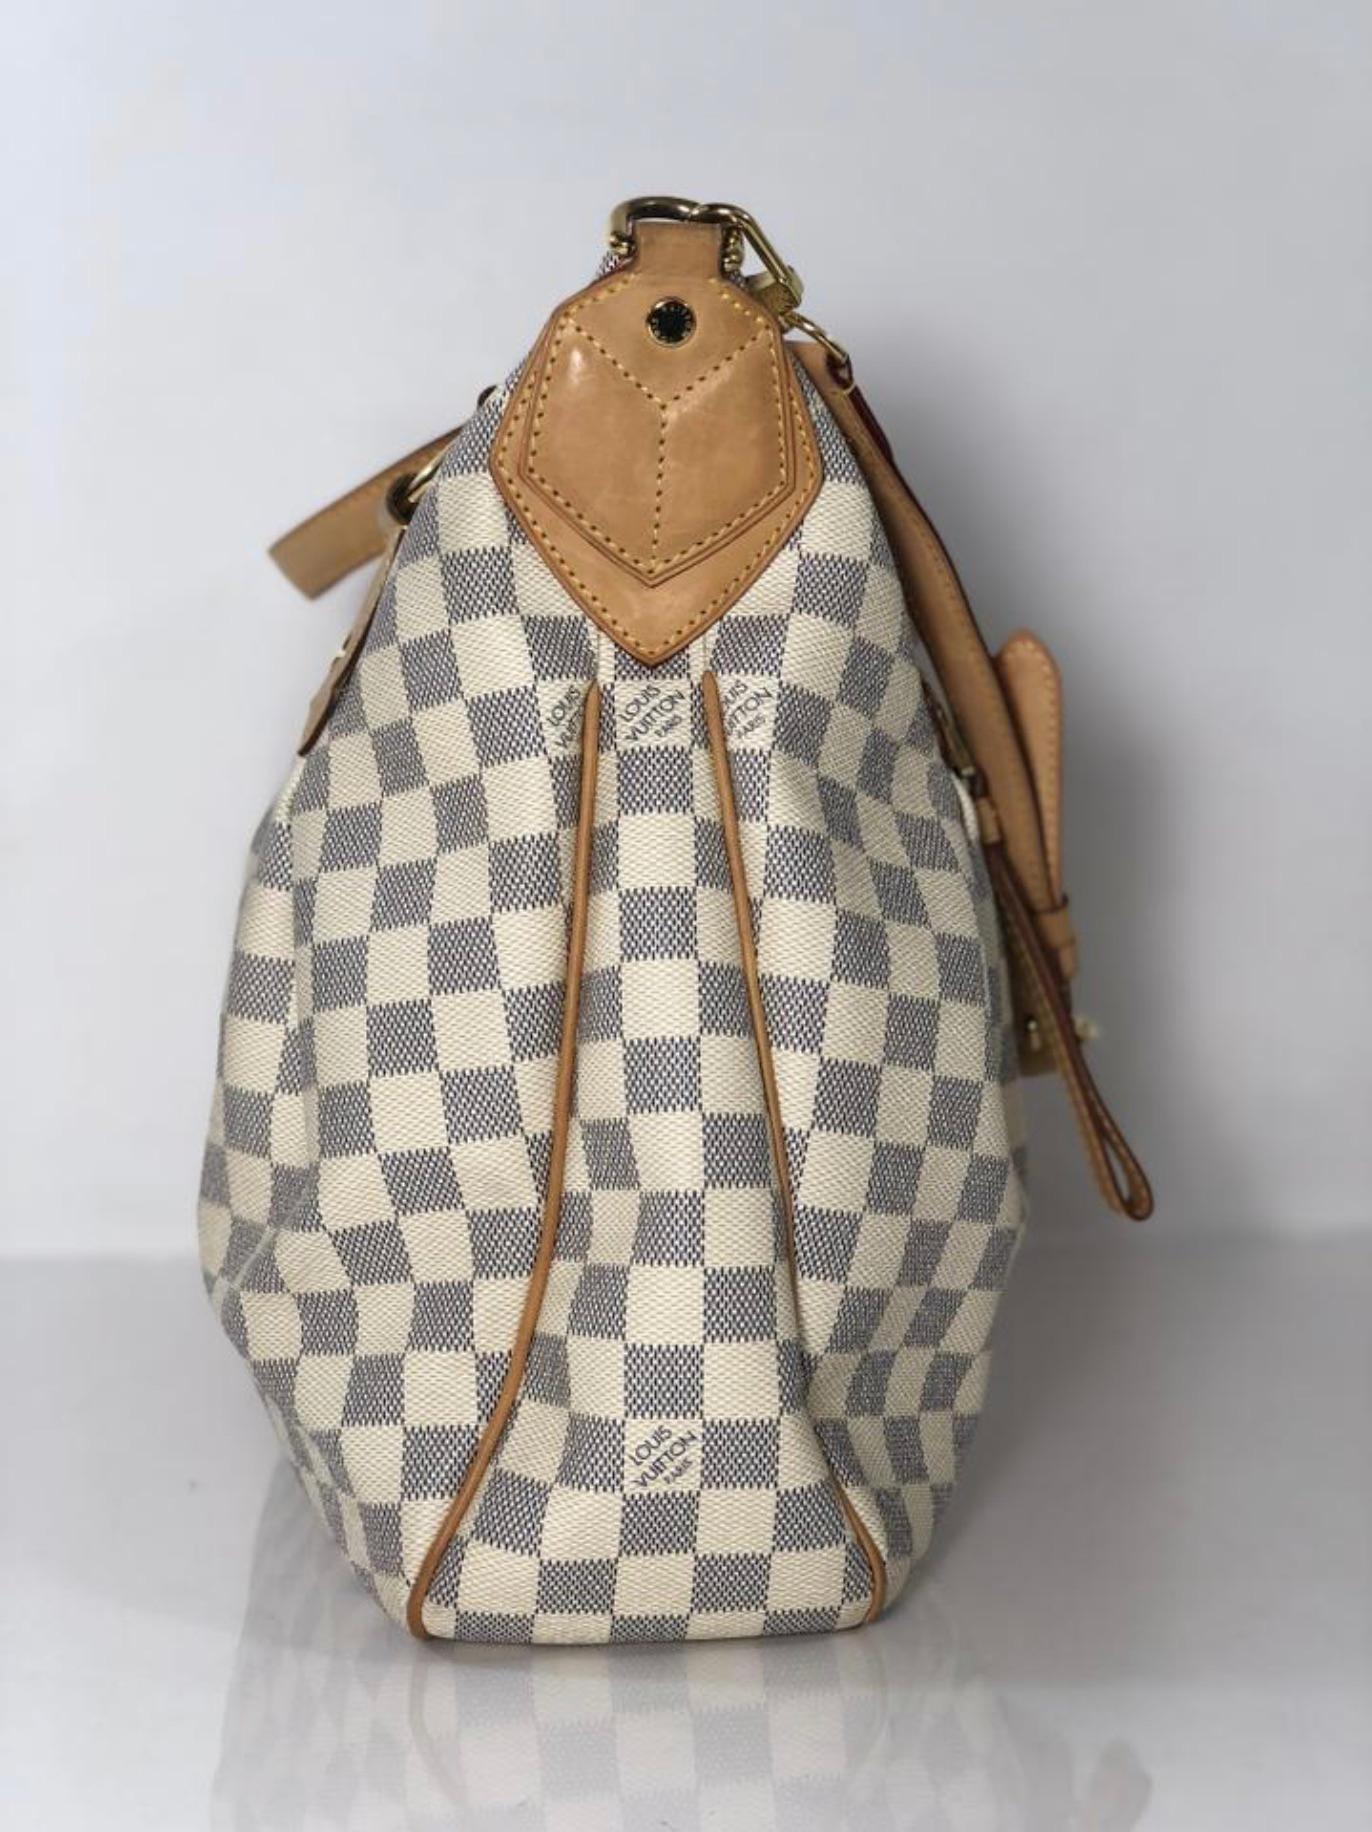 Louis Vuitton Damier Azur Evora MM Shoulder Handbag In Excellent Condition For Sale In Saint Charles, IL